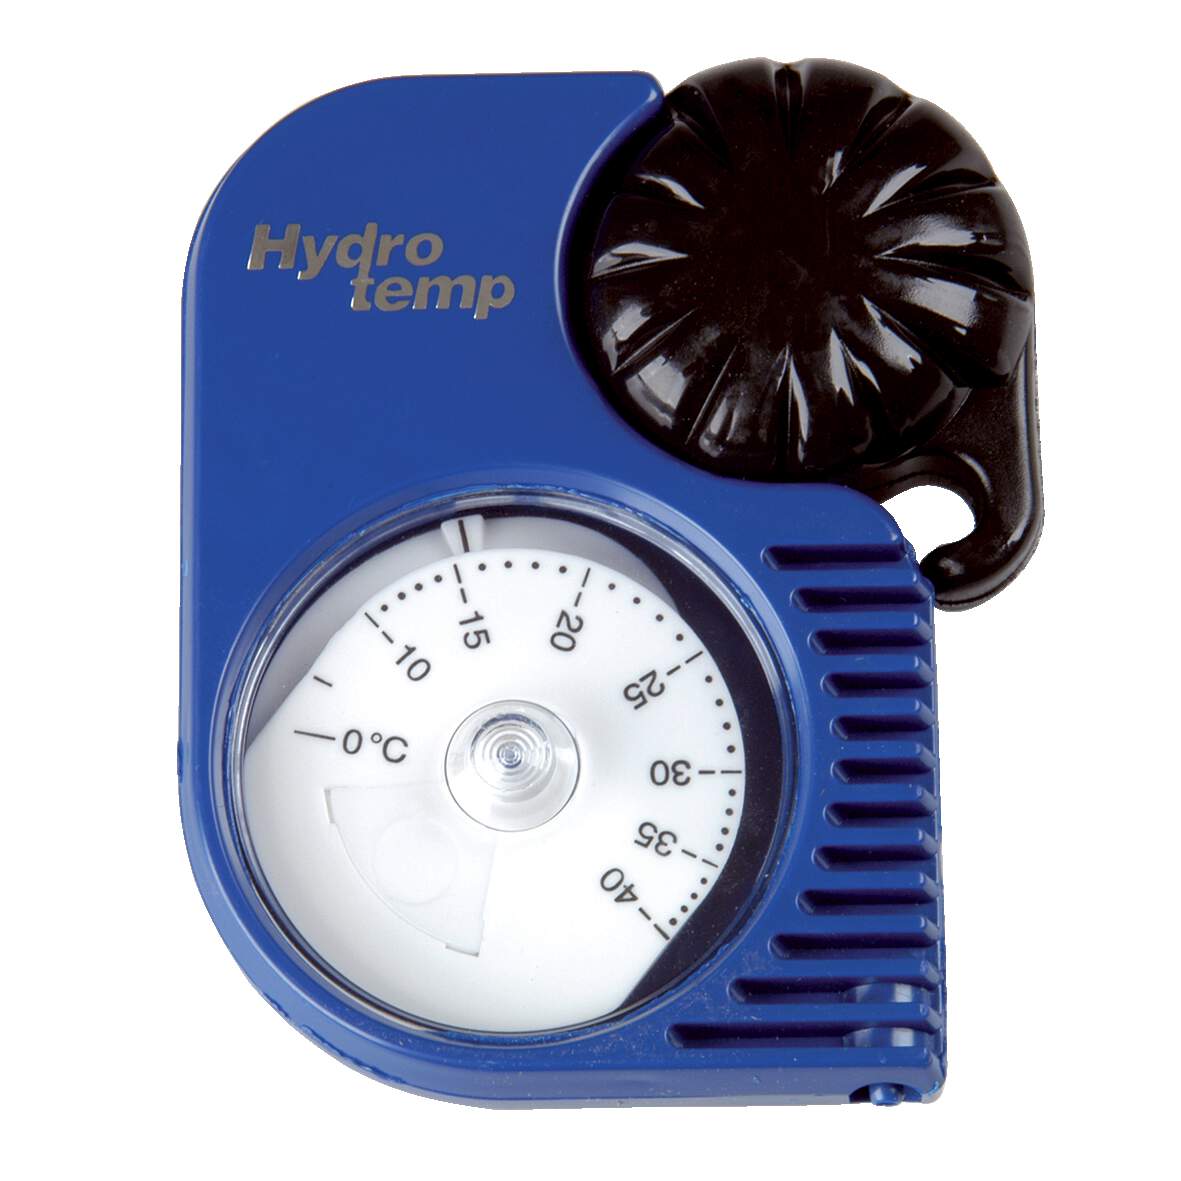 Frostschutzprüfer Hydro-Temp (1138712) - bei LET'S DOIT